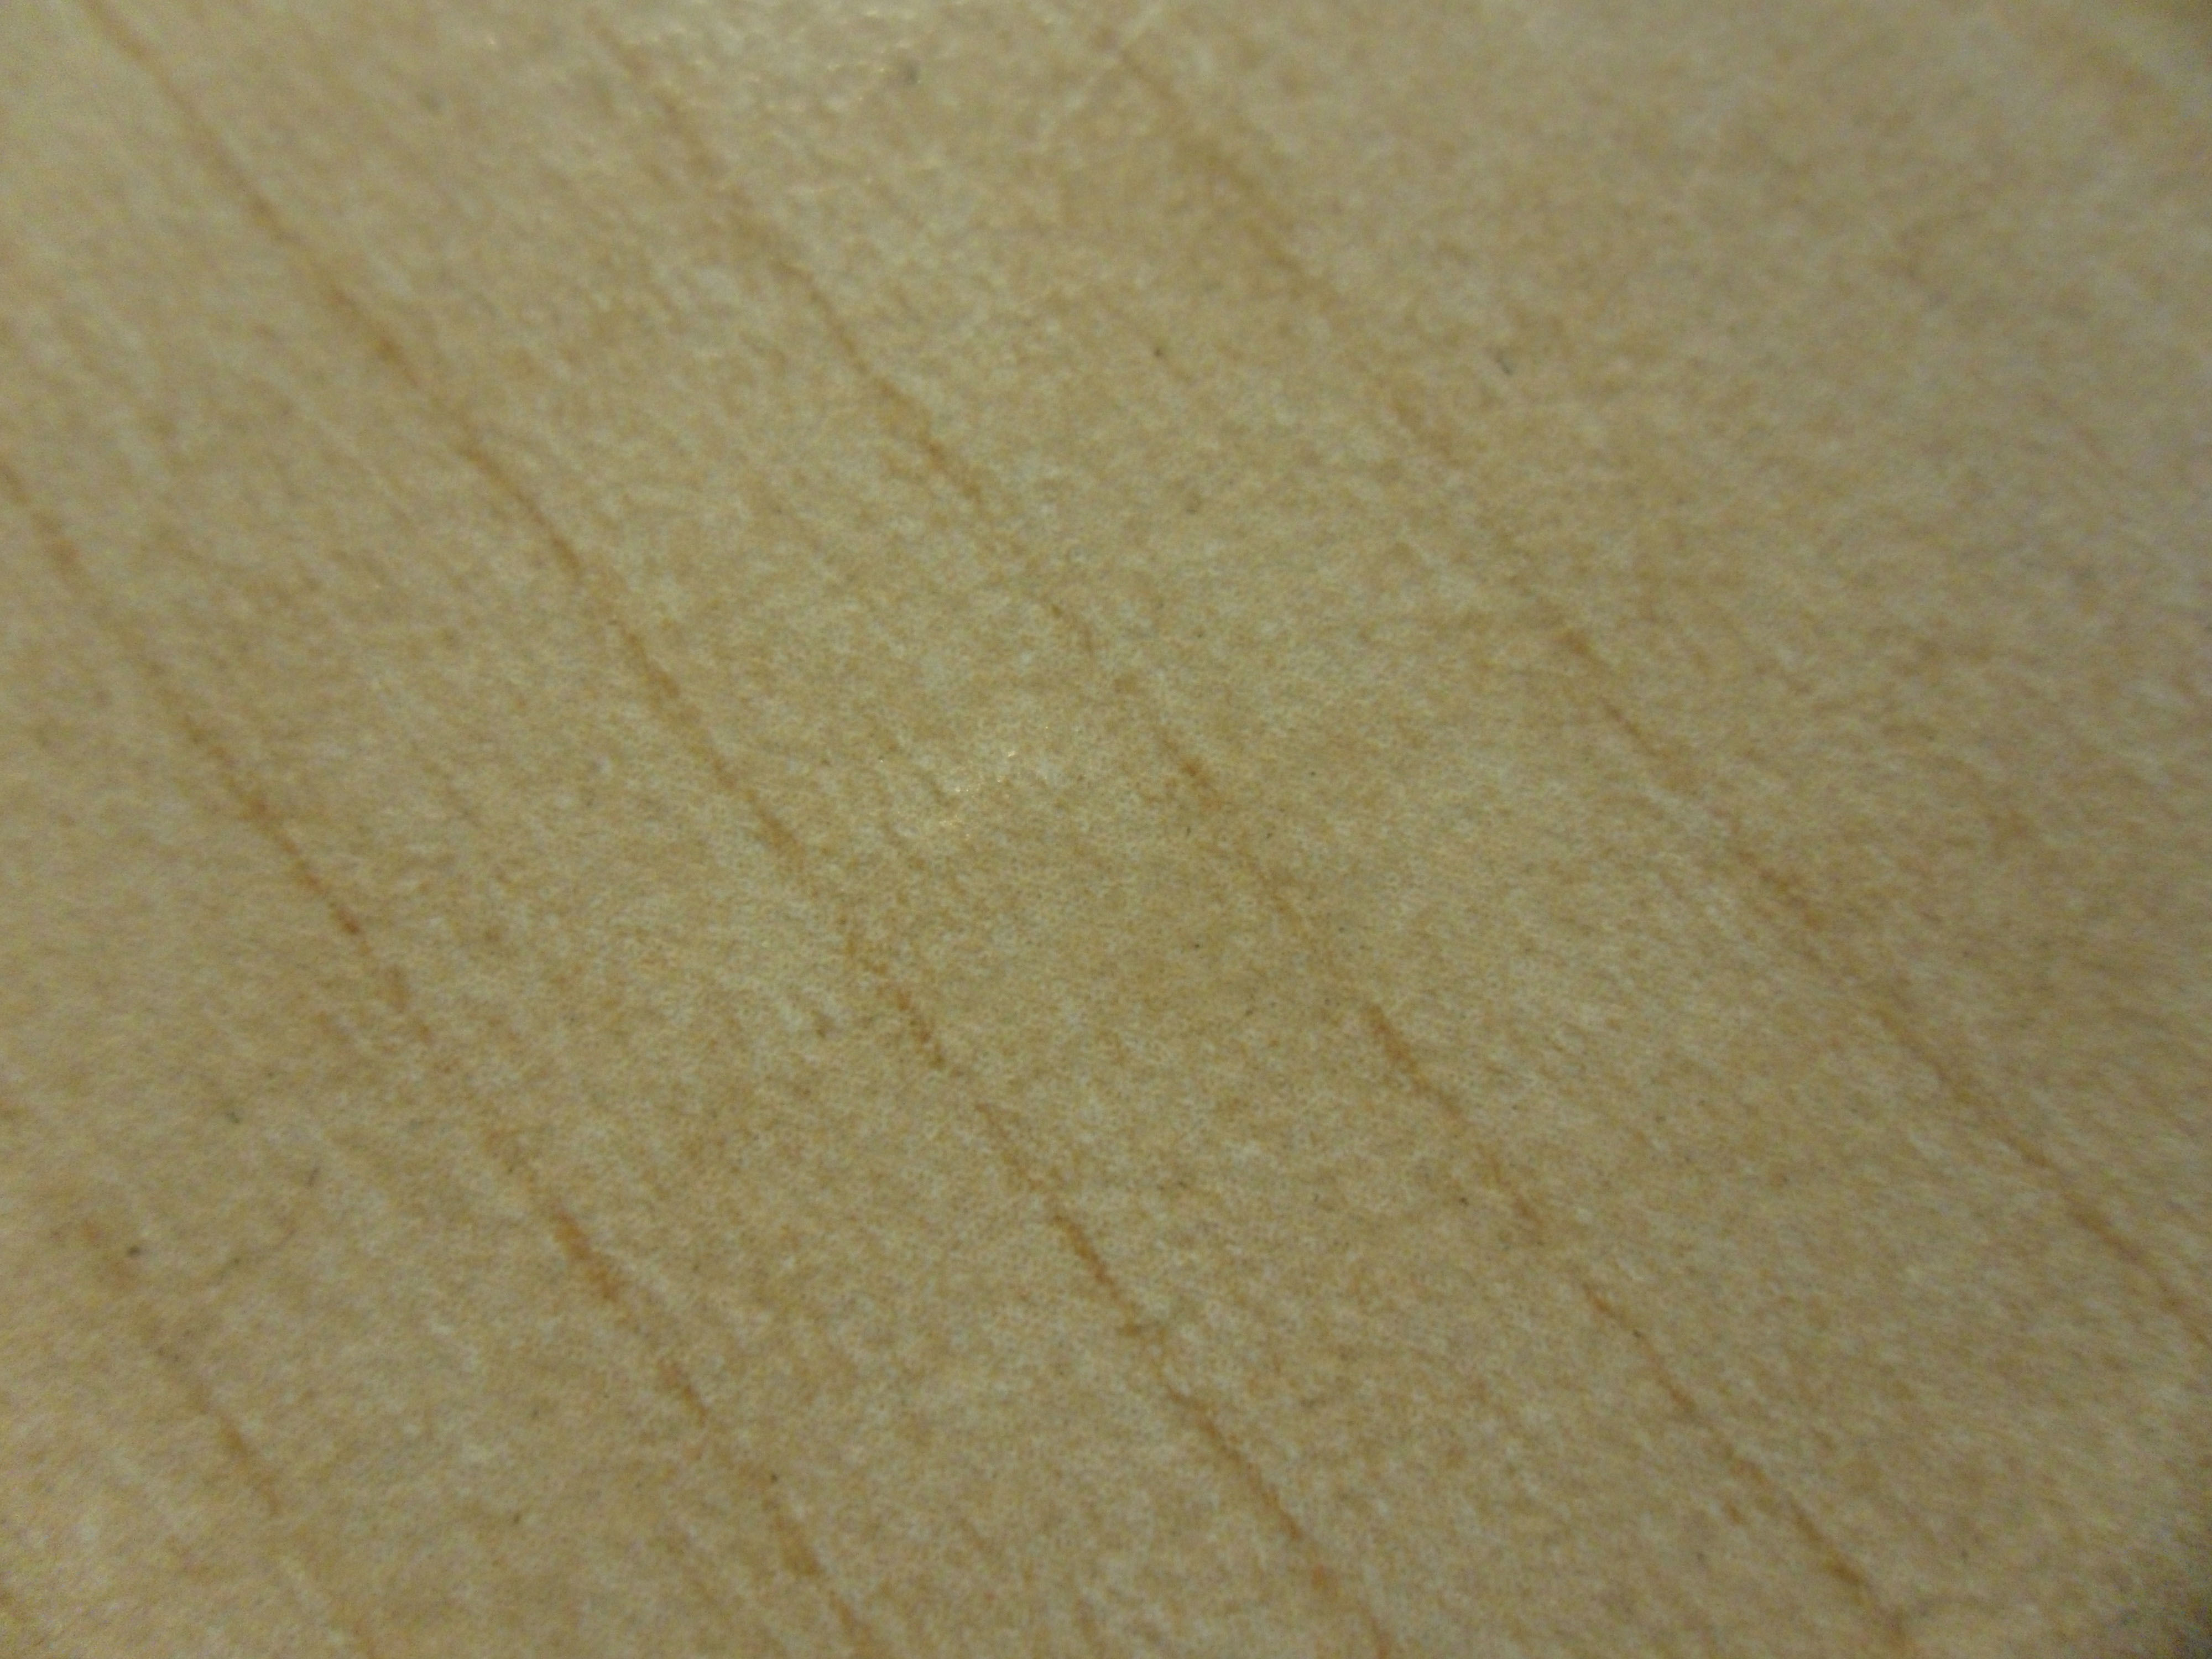 Wooden Texture: Wooden Desktop Print (3 Free Images for download)